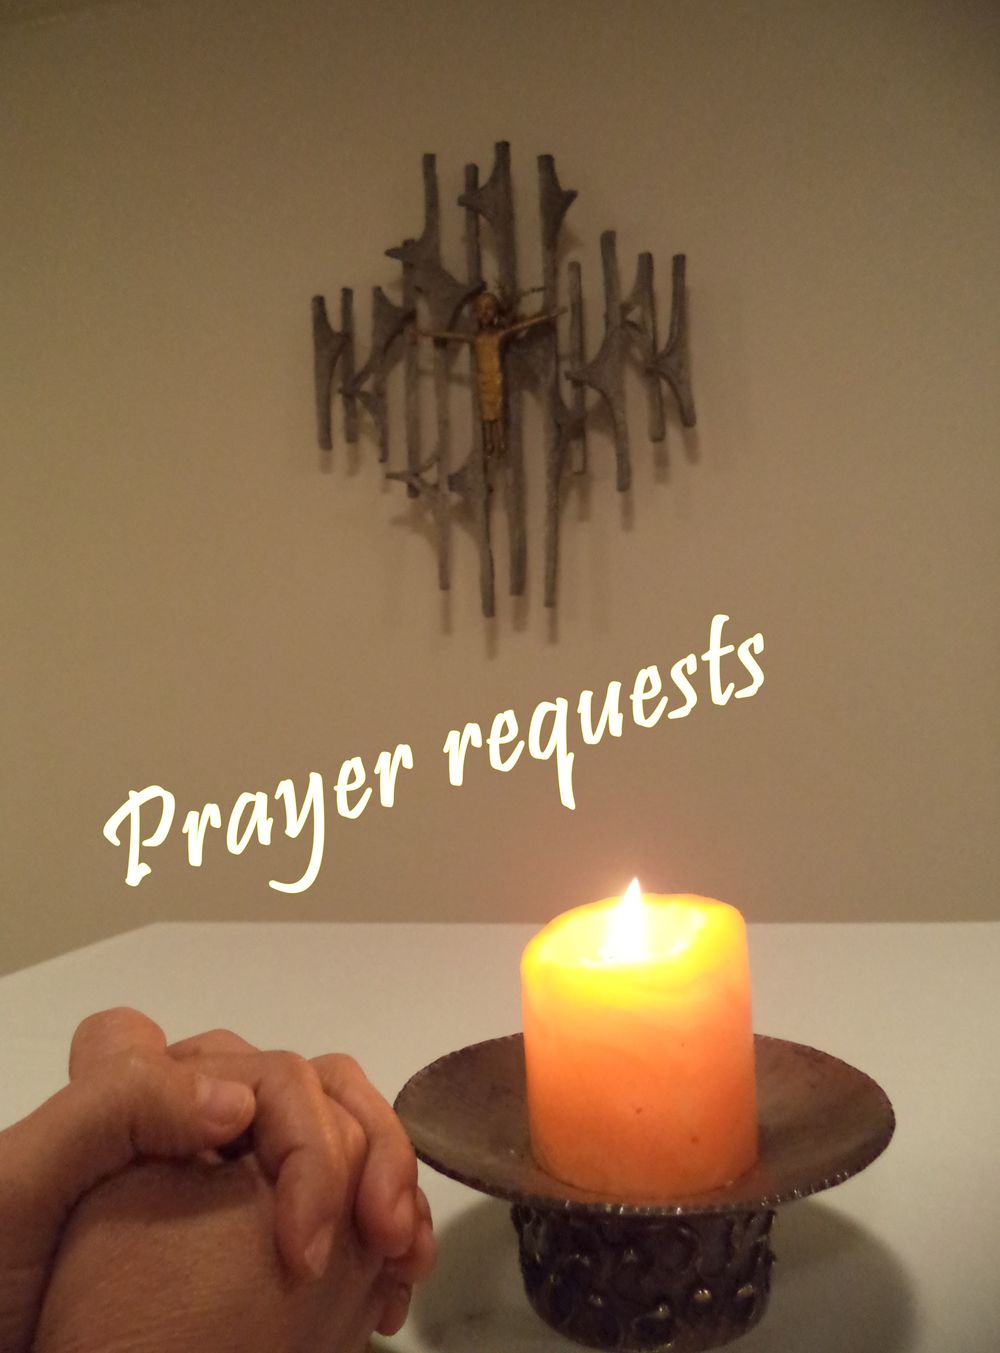 Prayer requests.